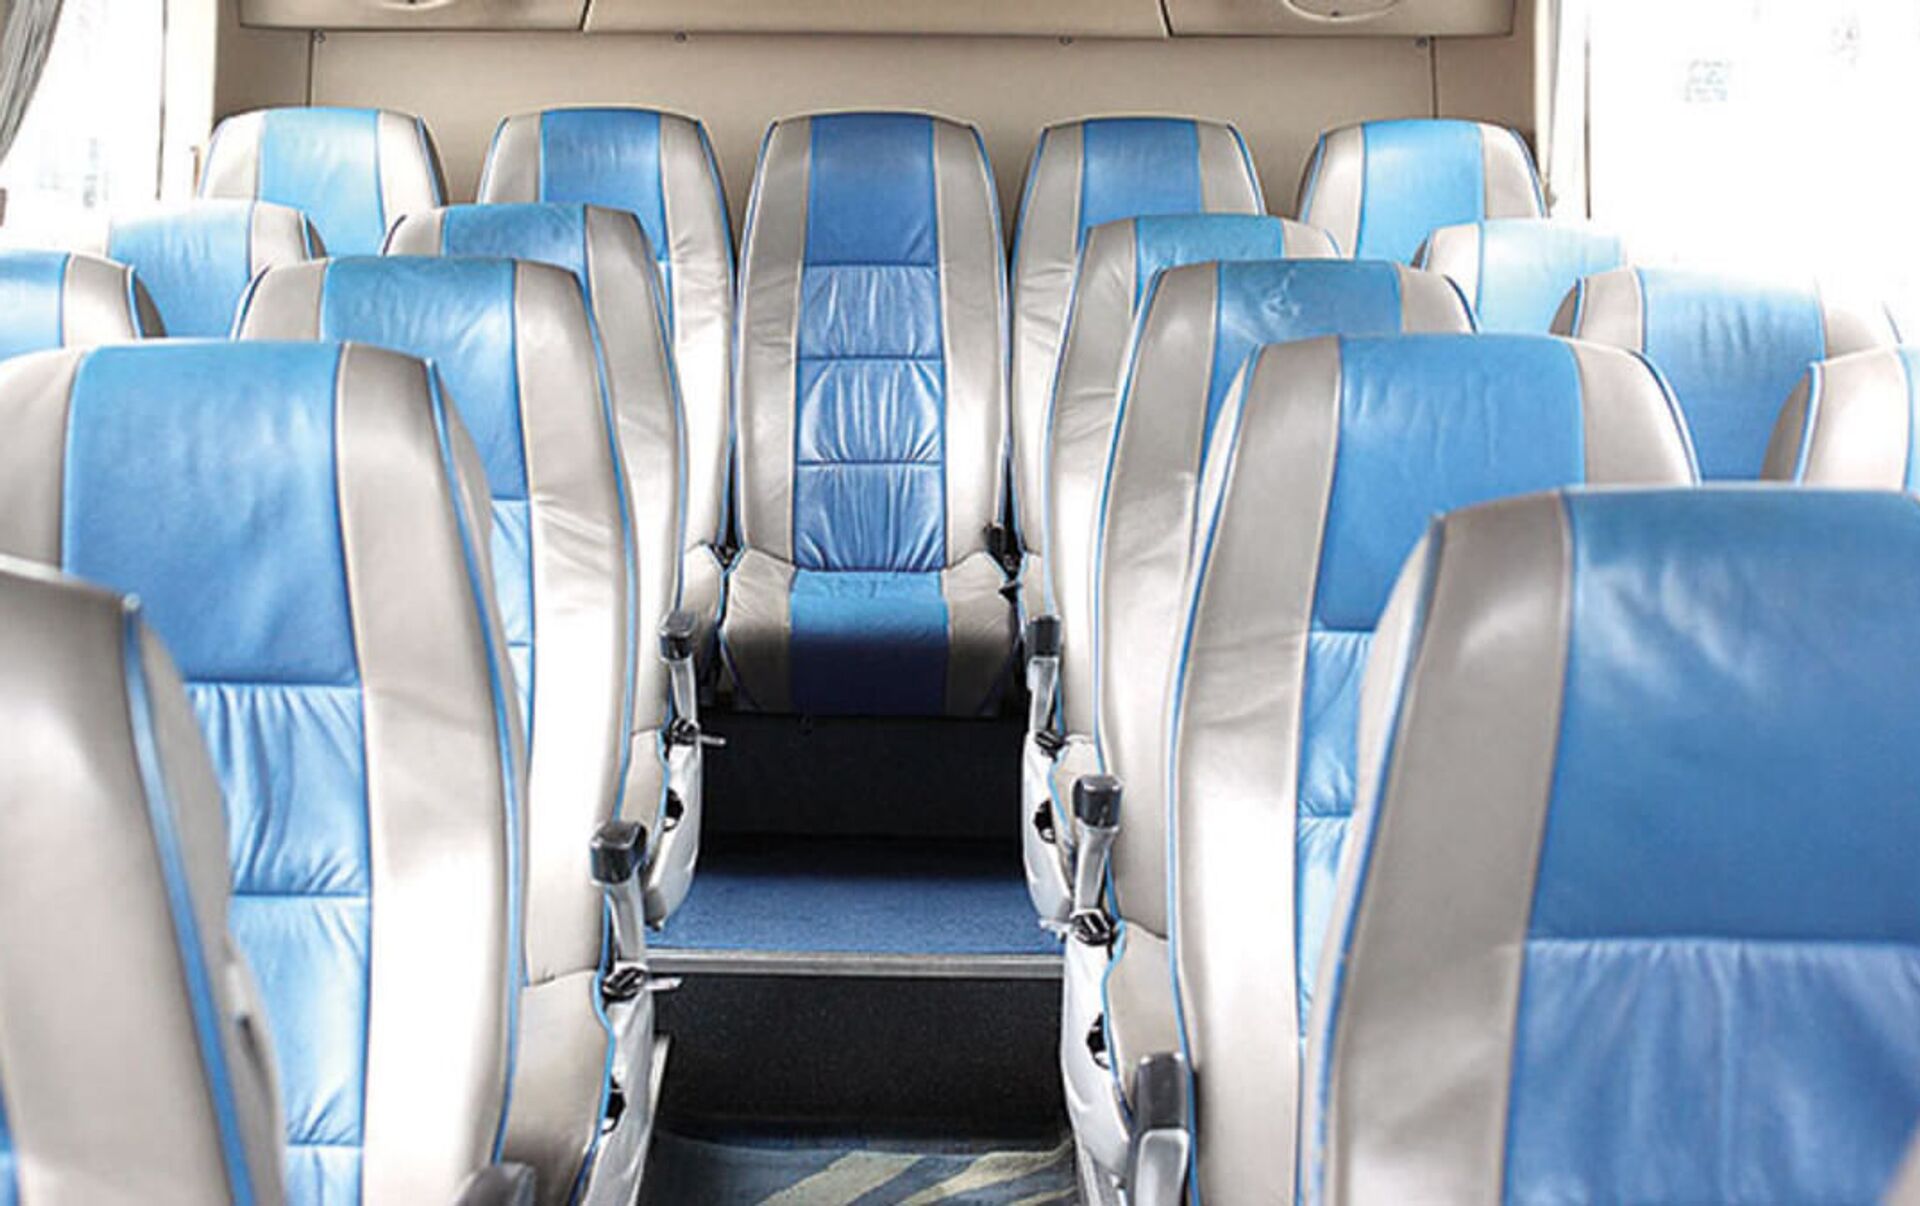 Bus seats. Bus Seats Top view. Bus Seat texture. Bus Seats Top view scheme. Bus Seat Top view Arrangements.